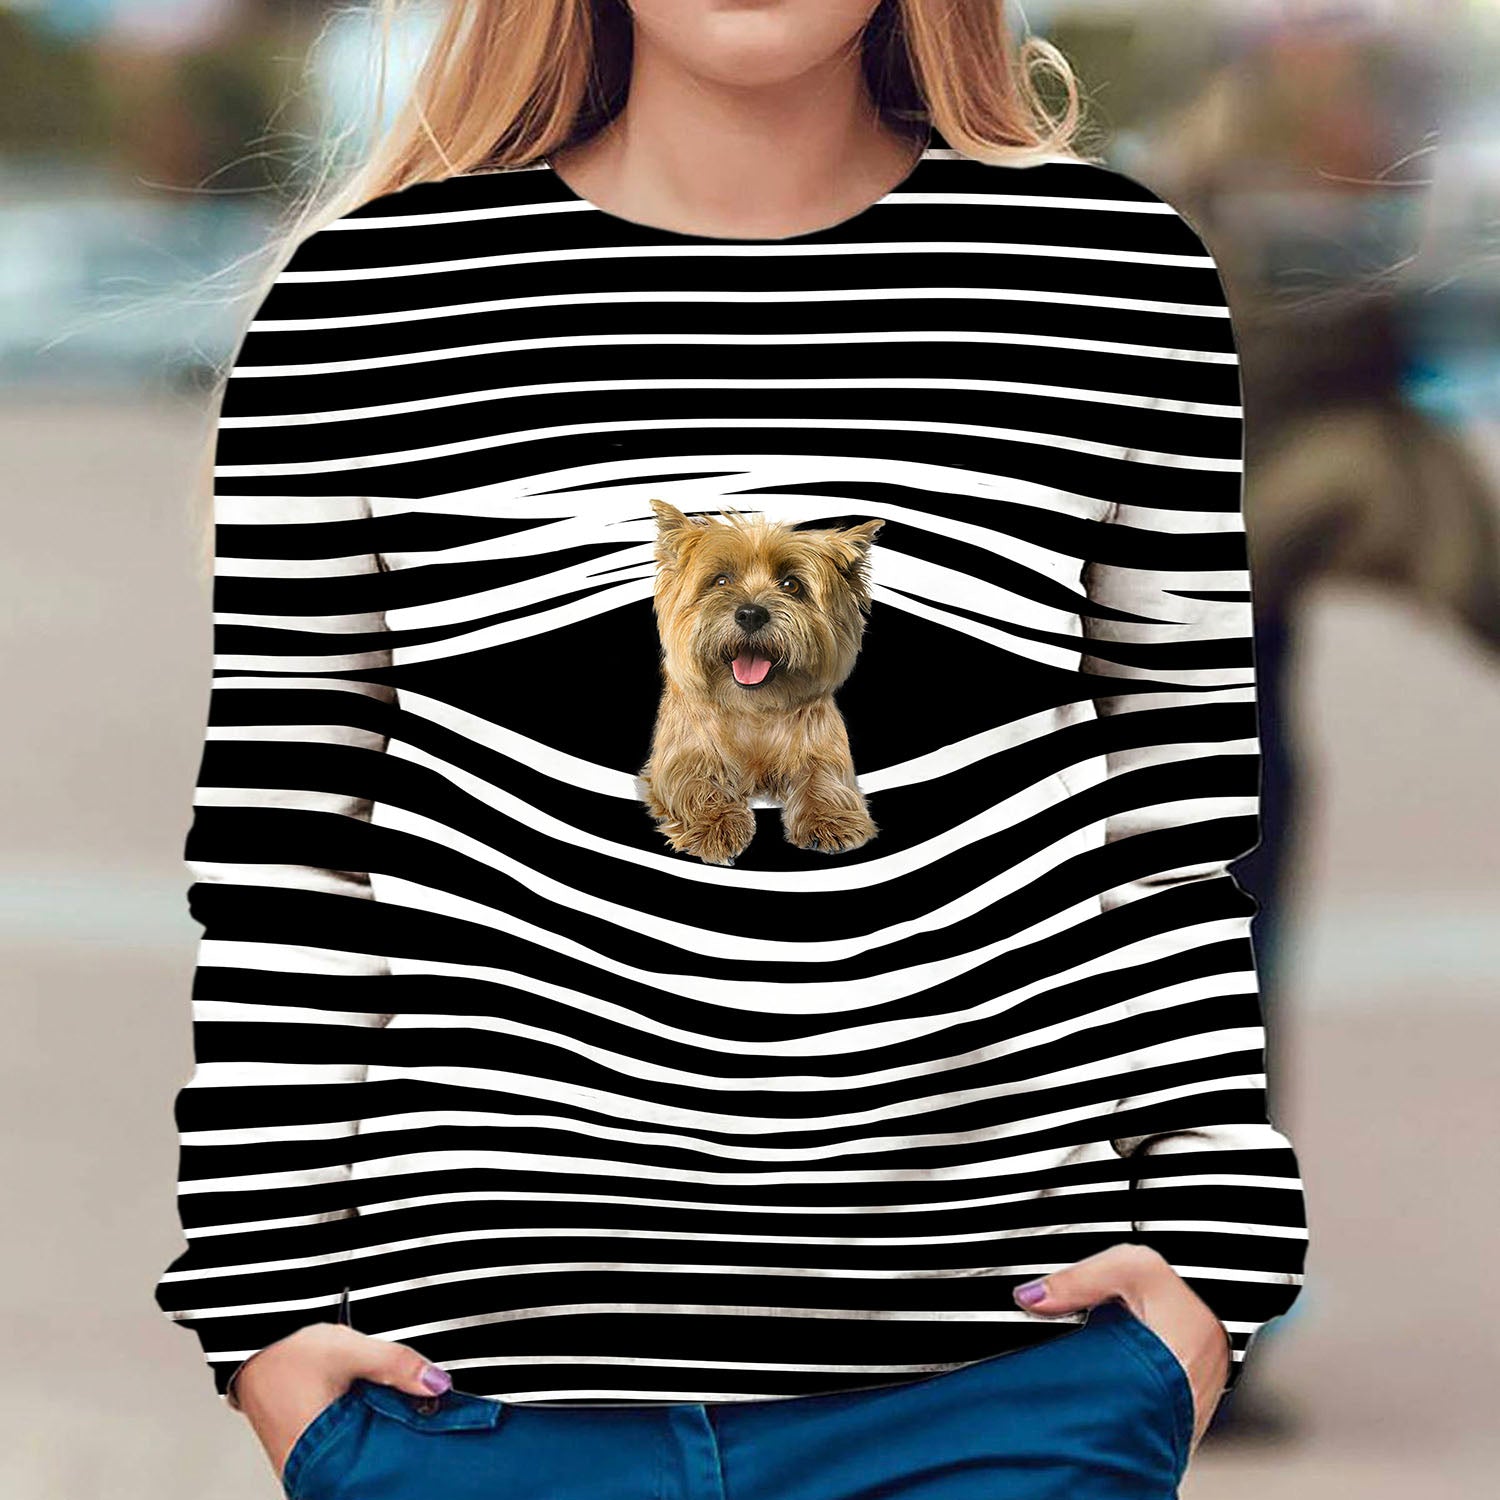 Cairn Terrier - Stripe - Premium Sweater